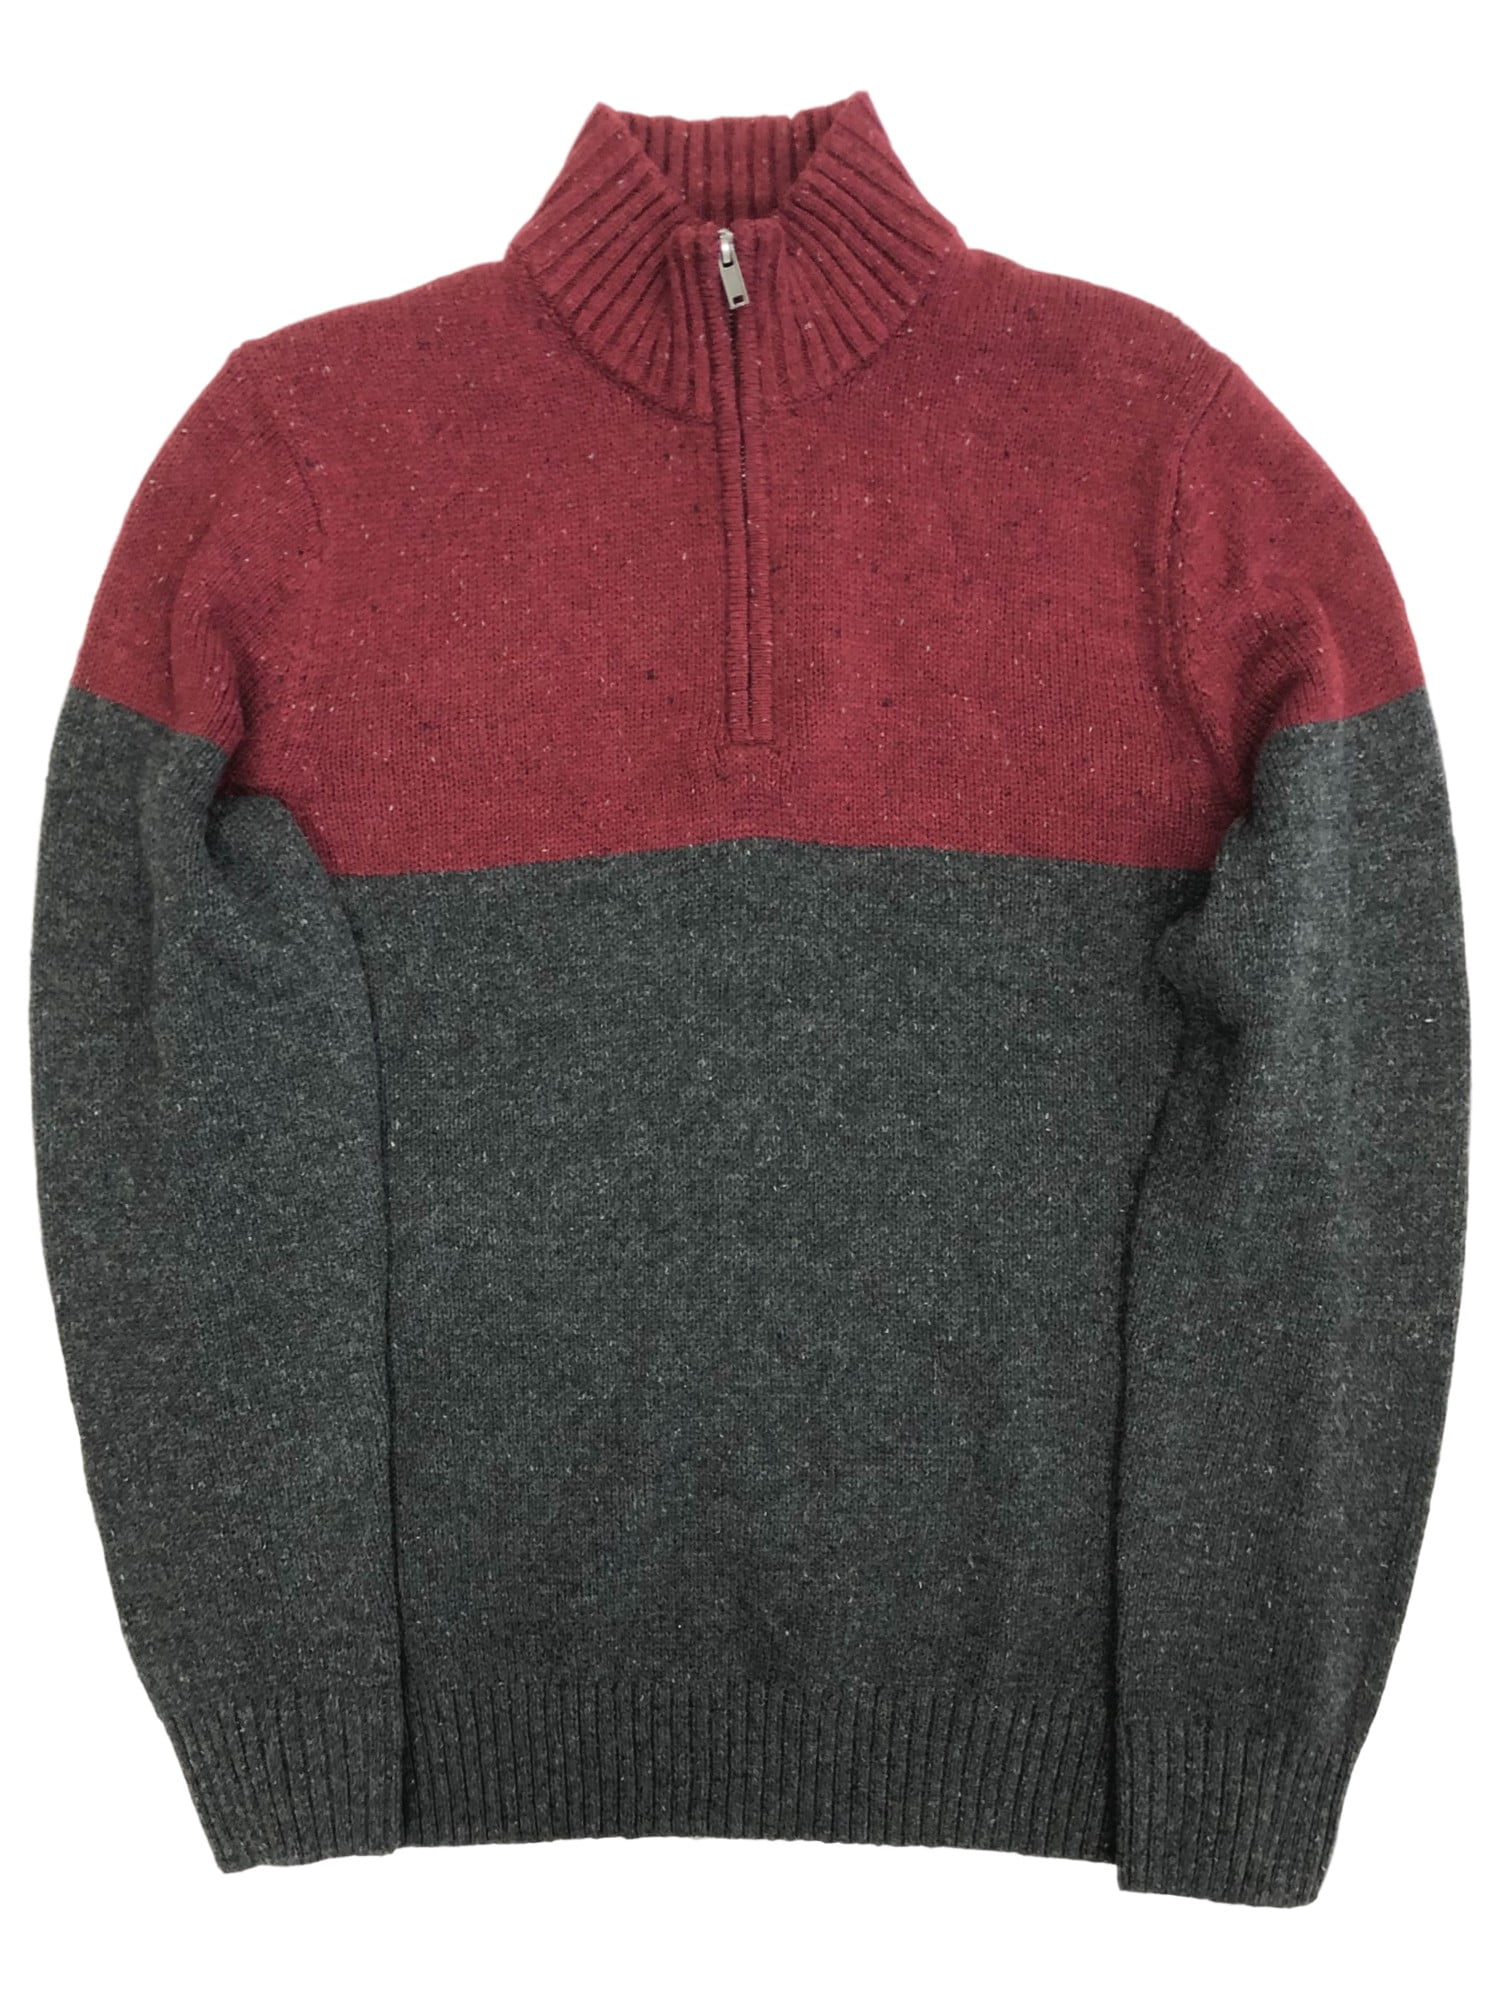 Mens Color Block Burgundy & Gray Speckle Quarter Zip Sweater Top